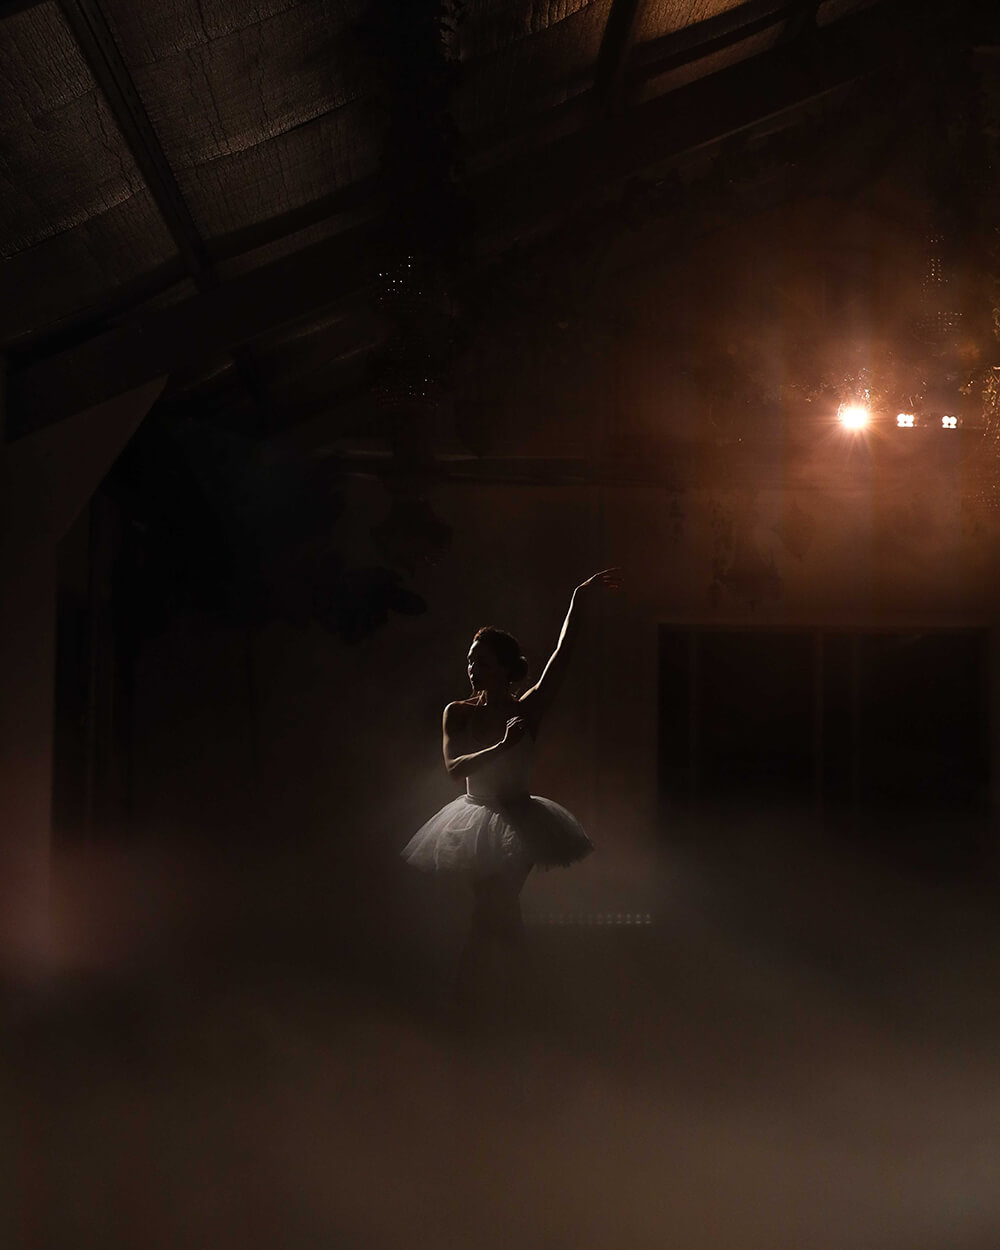 Low light image of ballet dancer in foggy studio by Julian Lallo